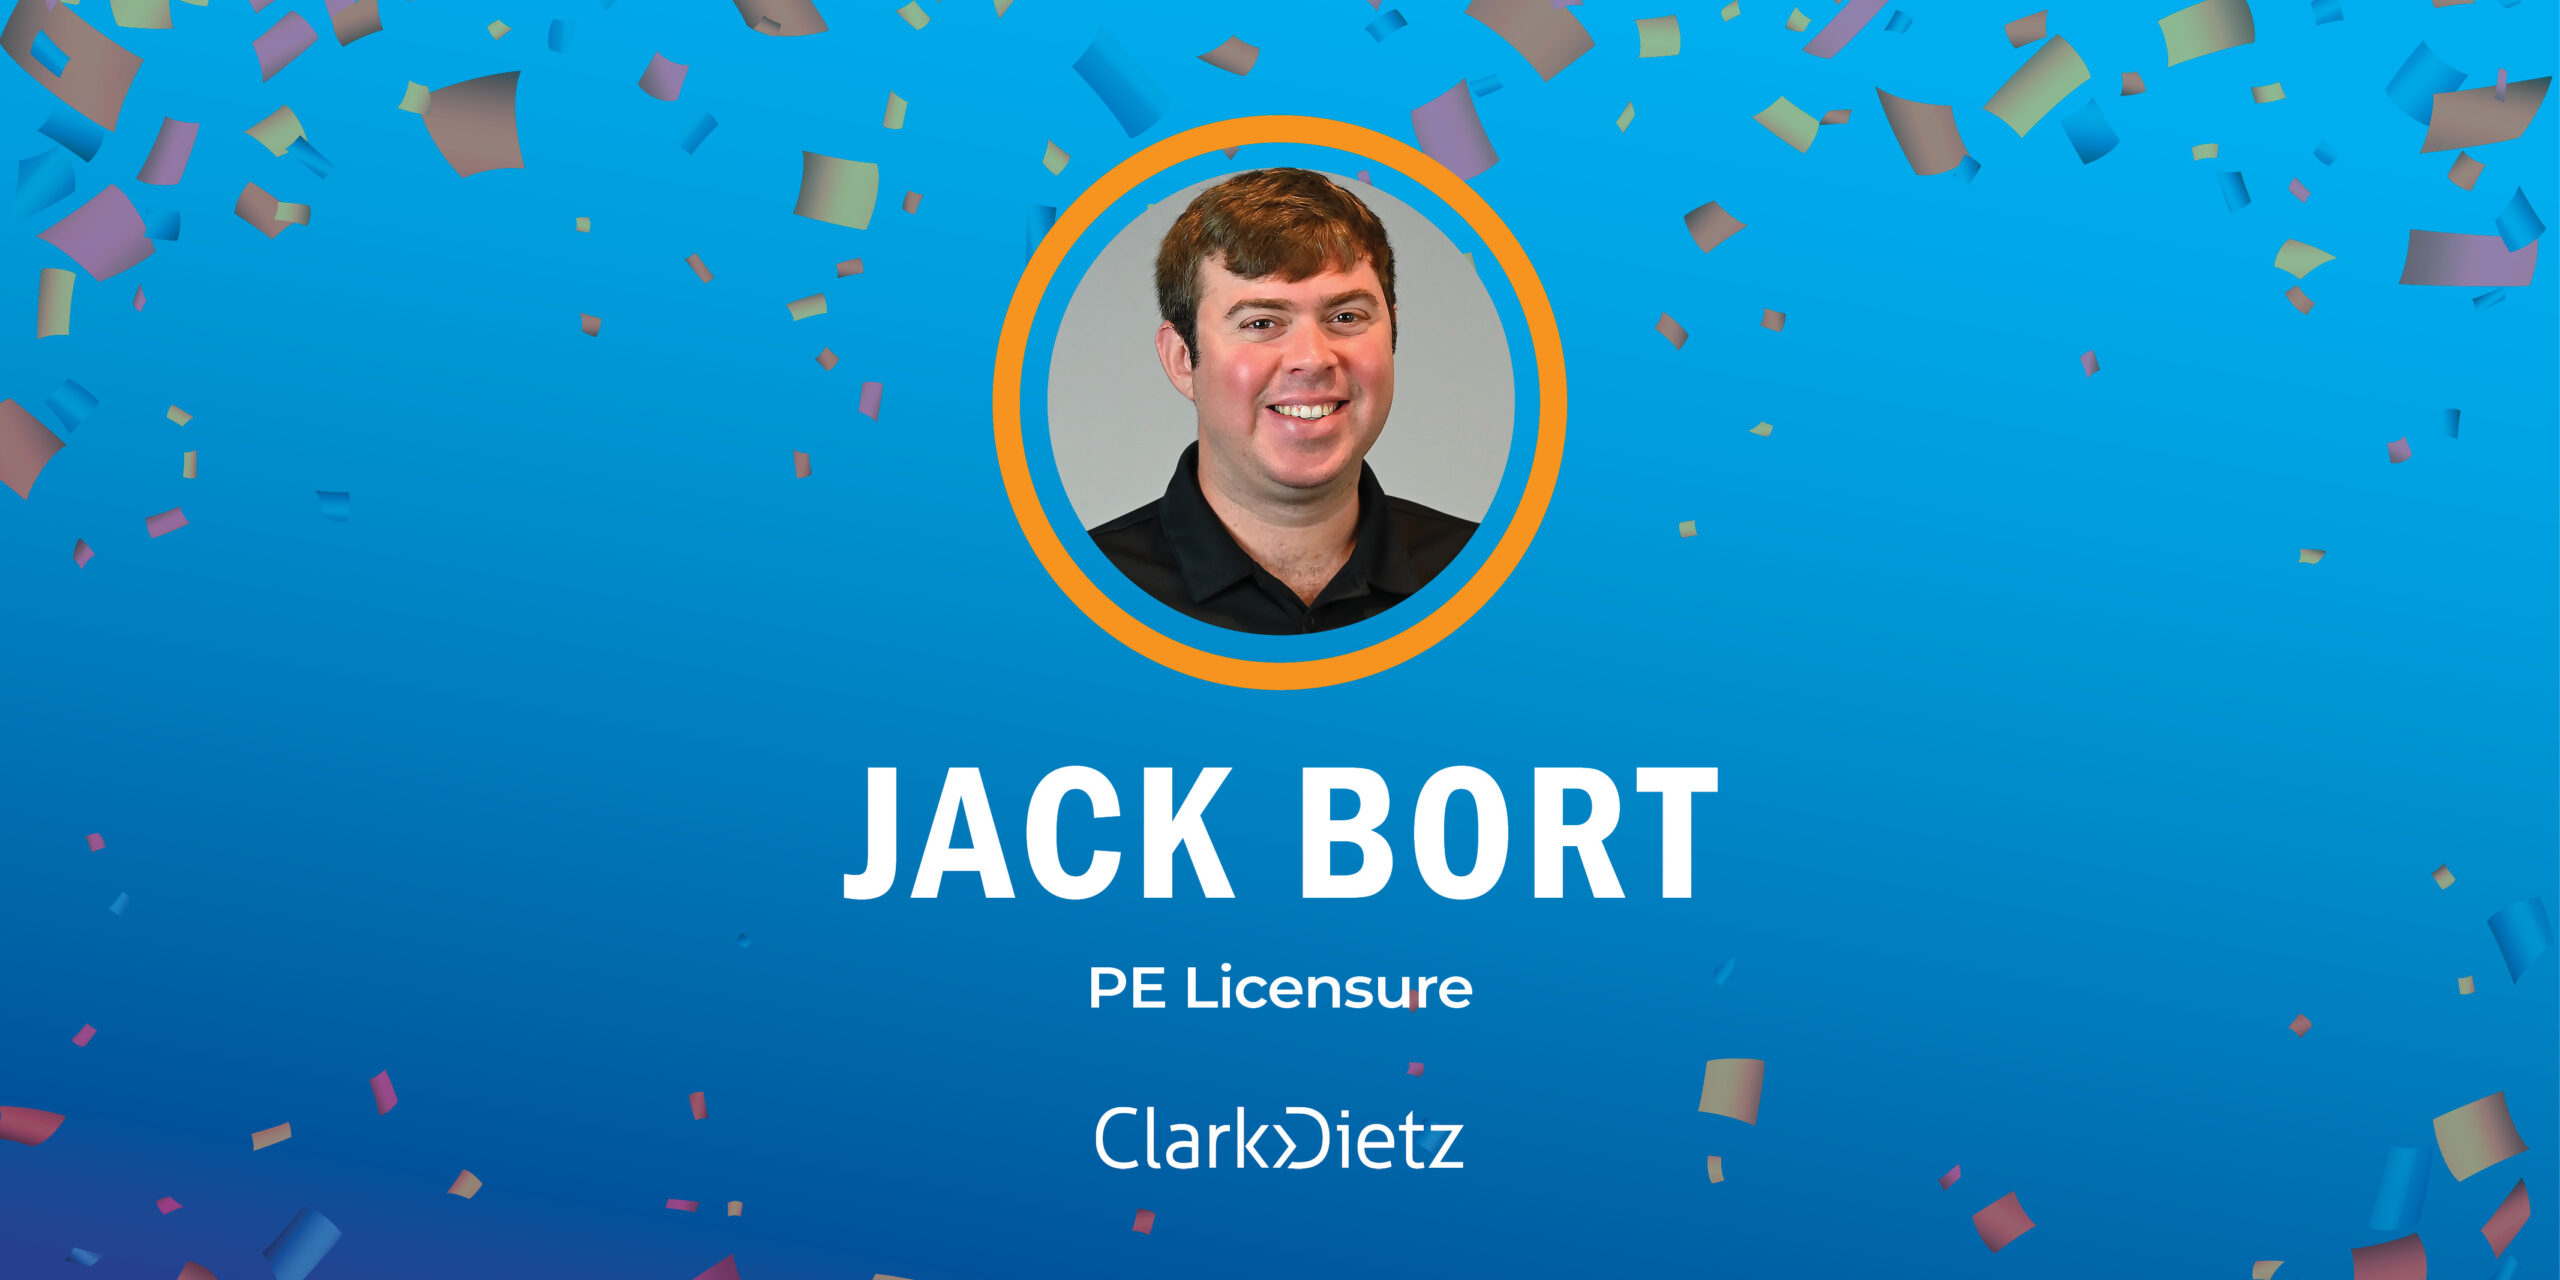 Jack Bort's headshot and notification of PE licensure